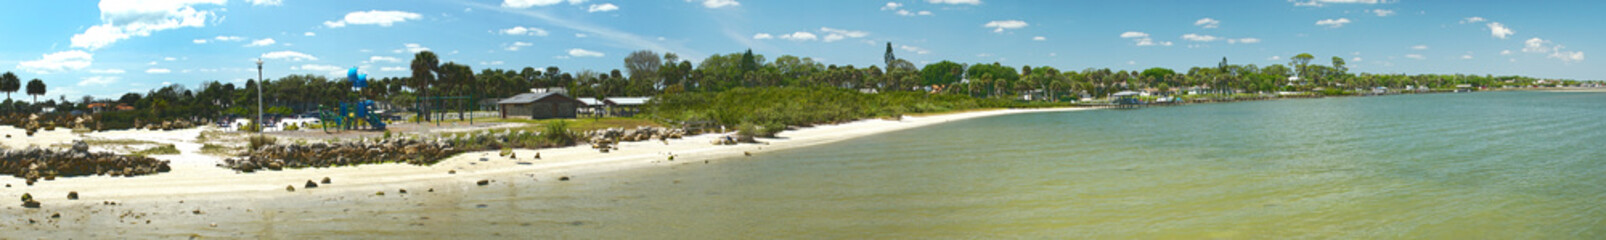 Maynard May Park Edwater Florida  near New Smyrna Beach  on a sunny morning